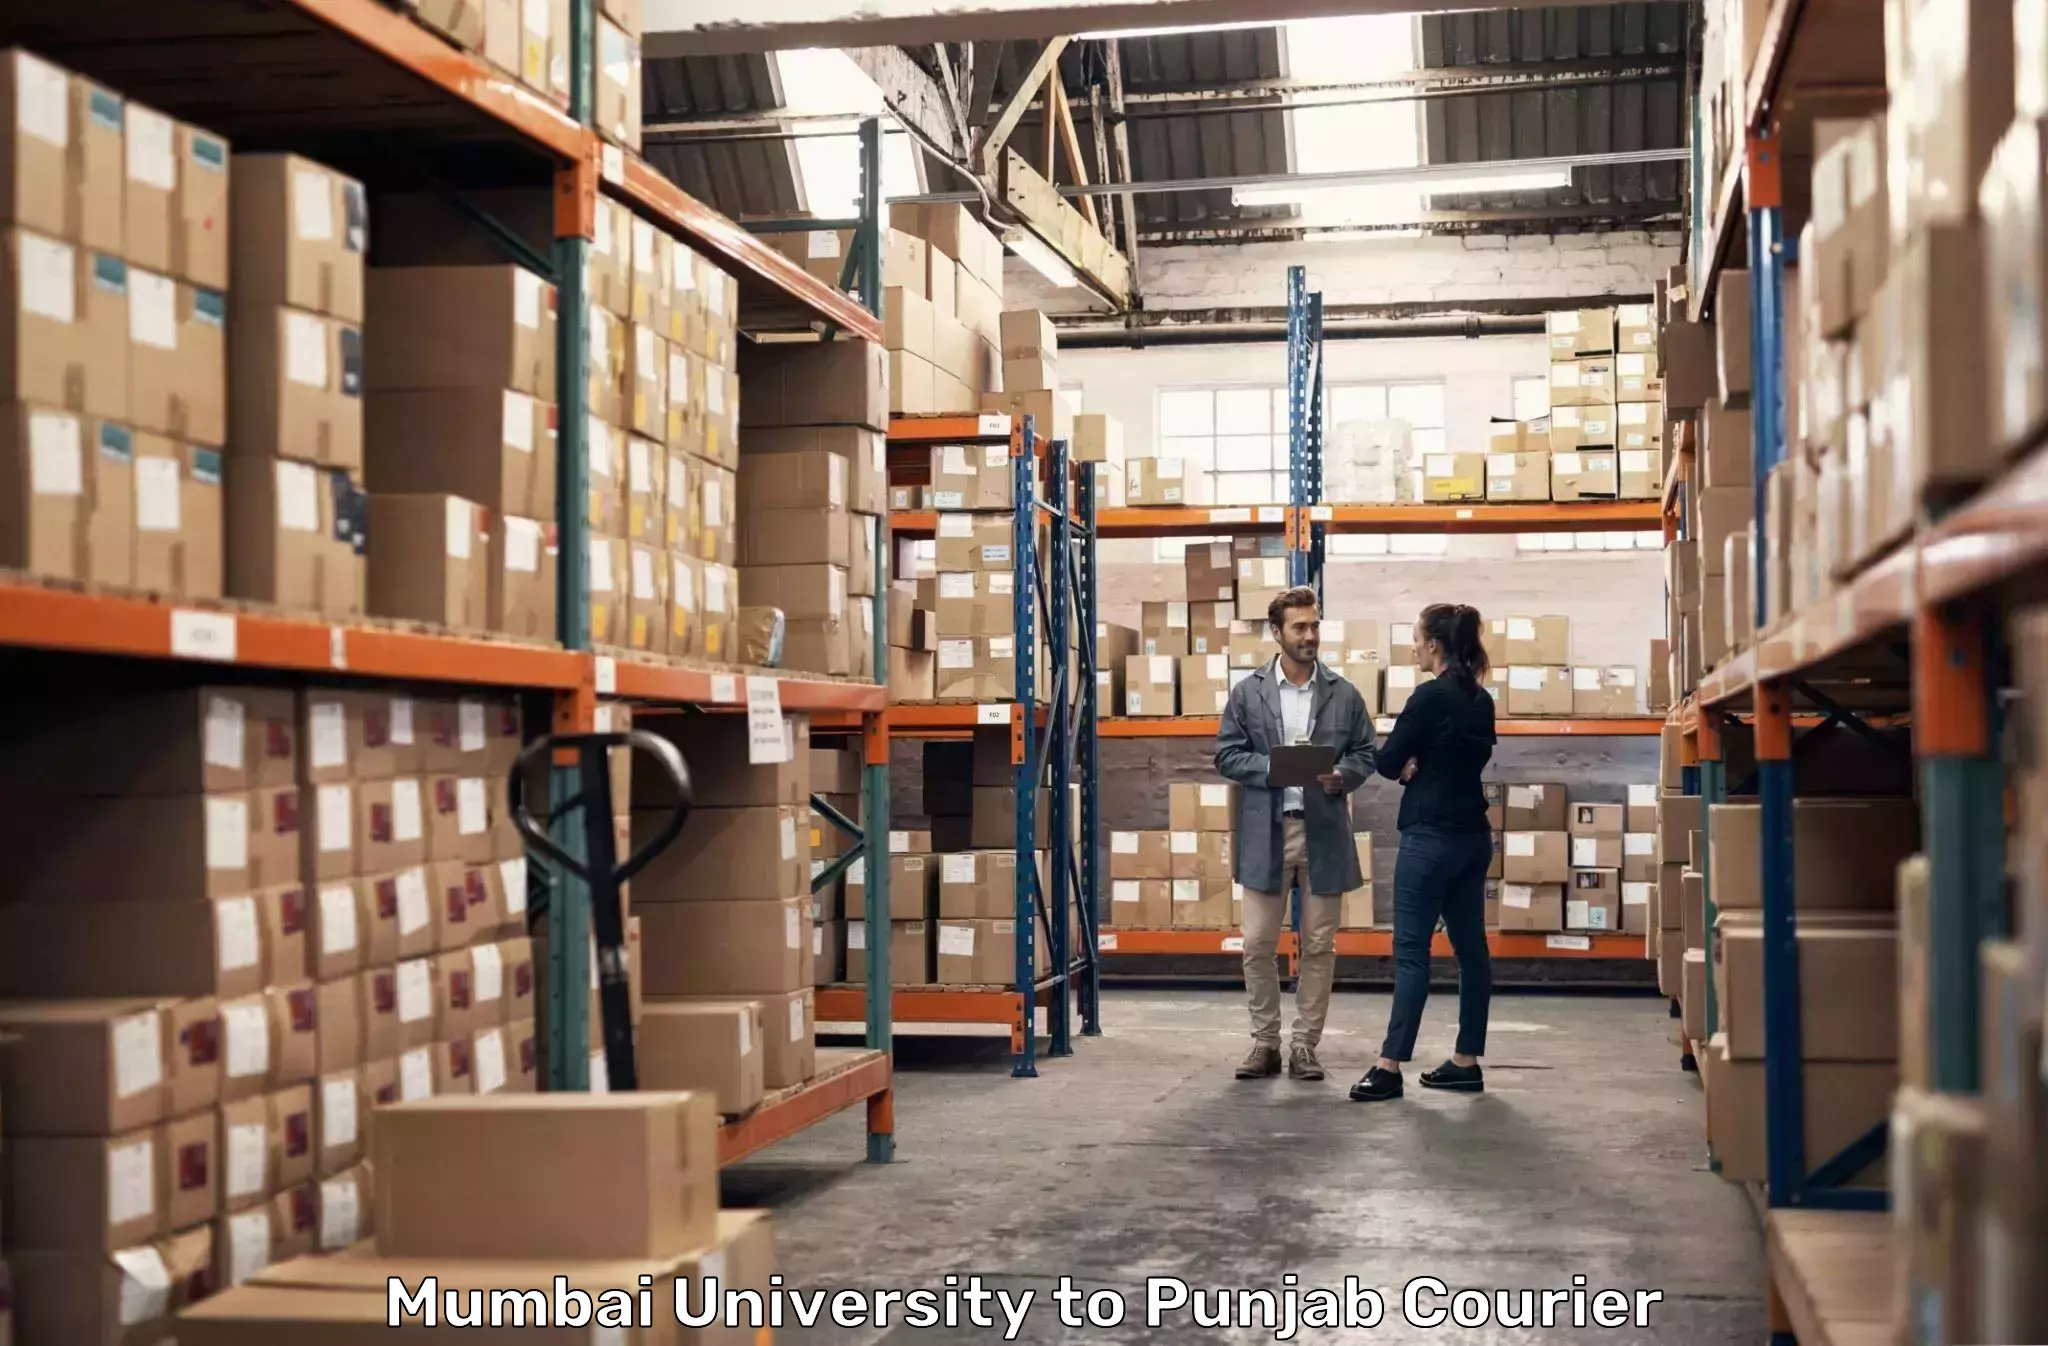 Business delivery service Mumbai University to Punjab